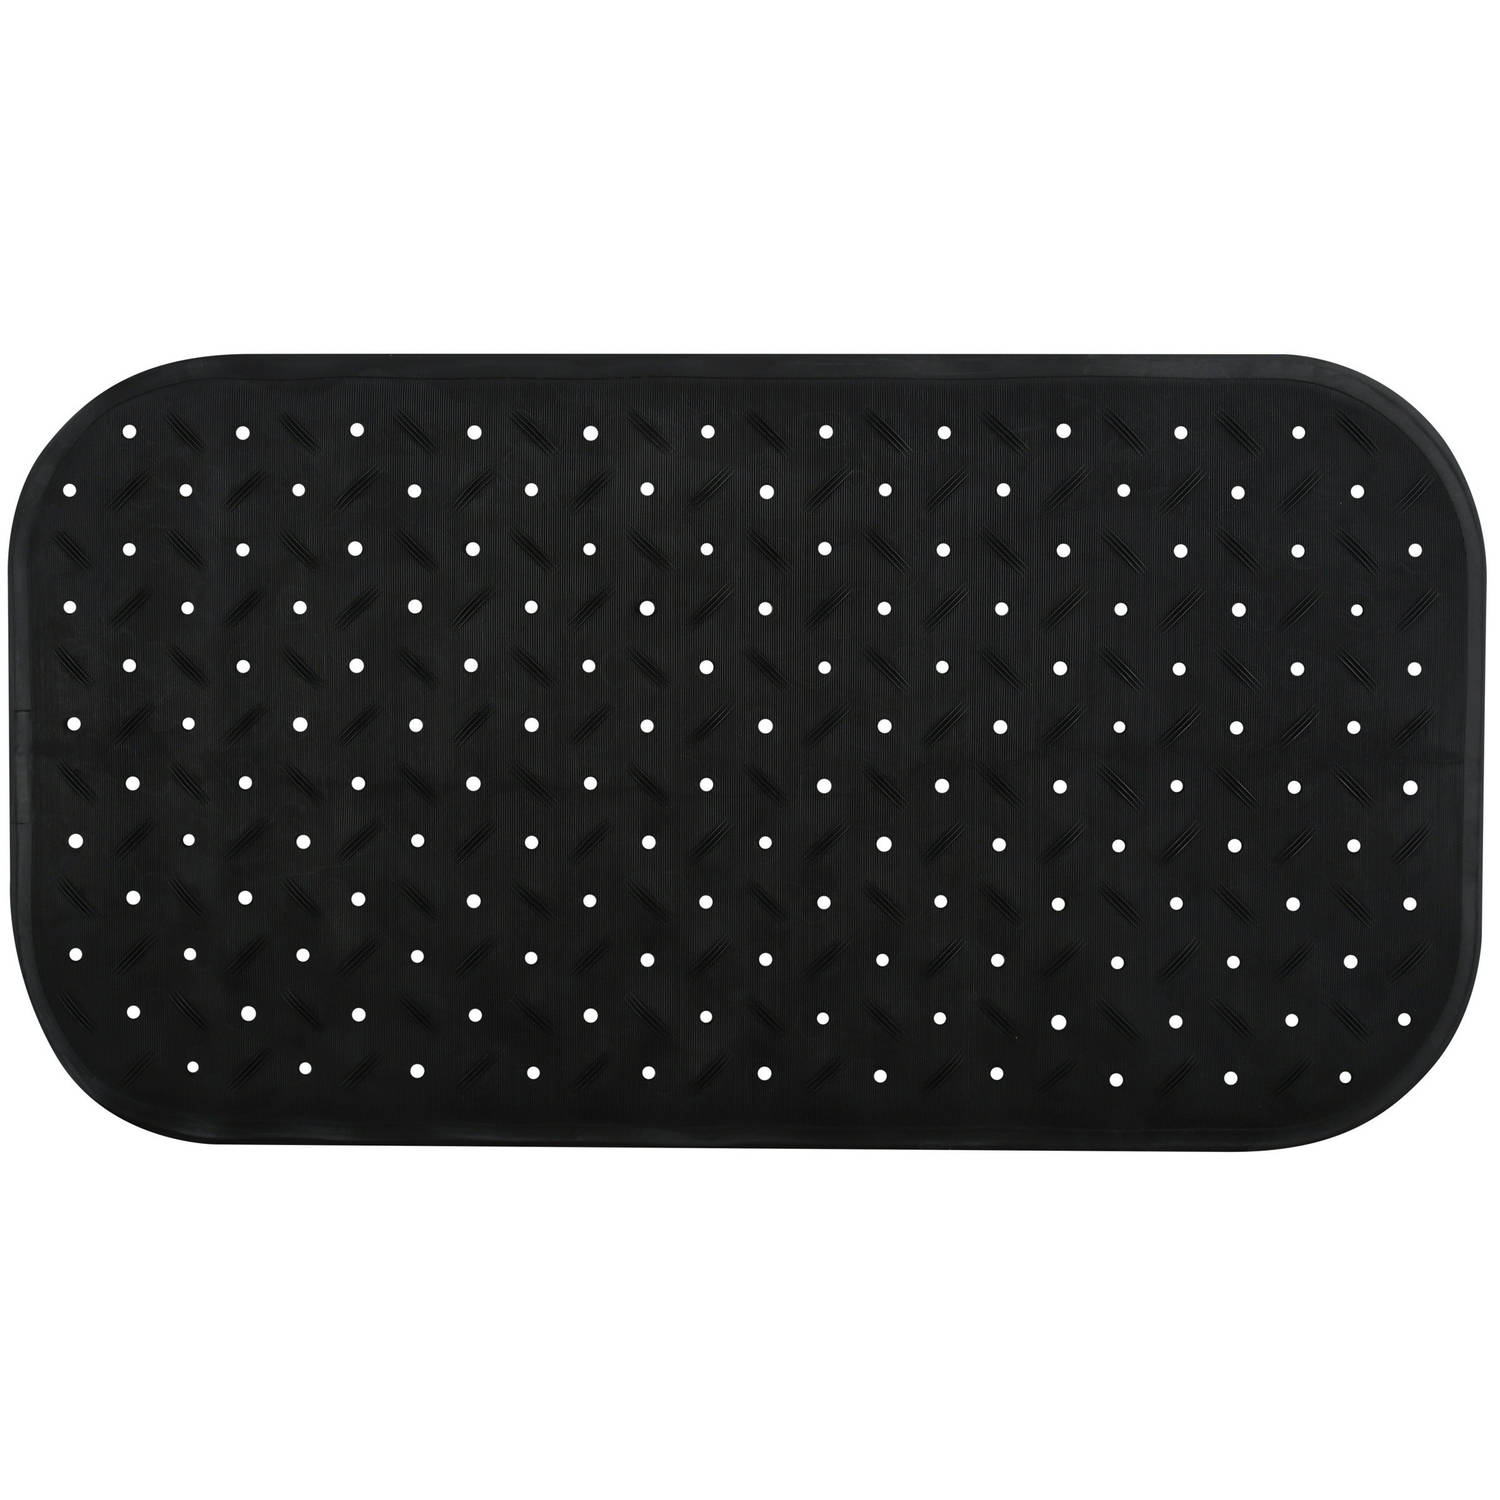 MSV Douche-bad anti-slip mat badkamer rubber zwart 36 x 65 cm Badmatjes